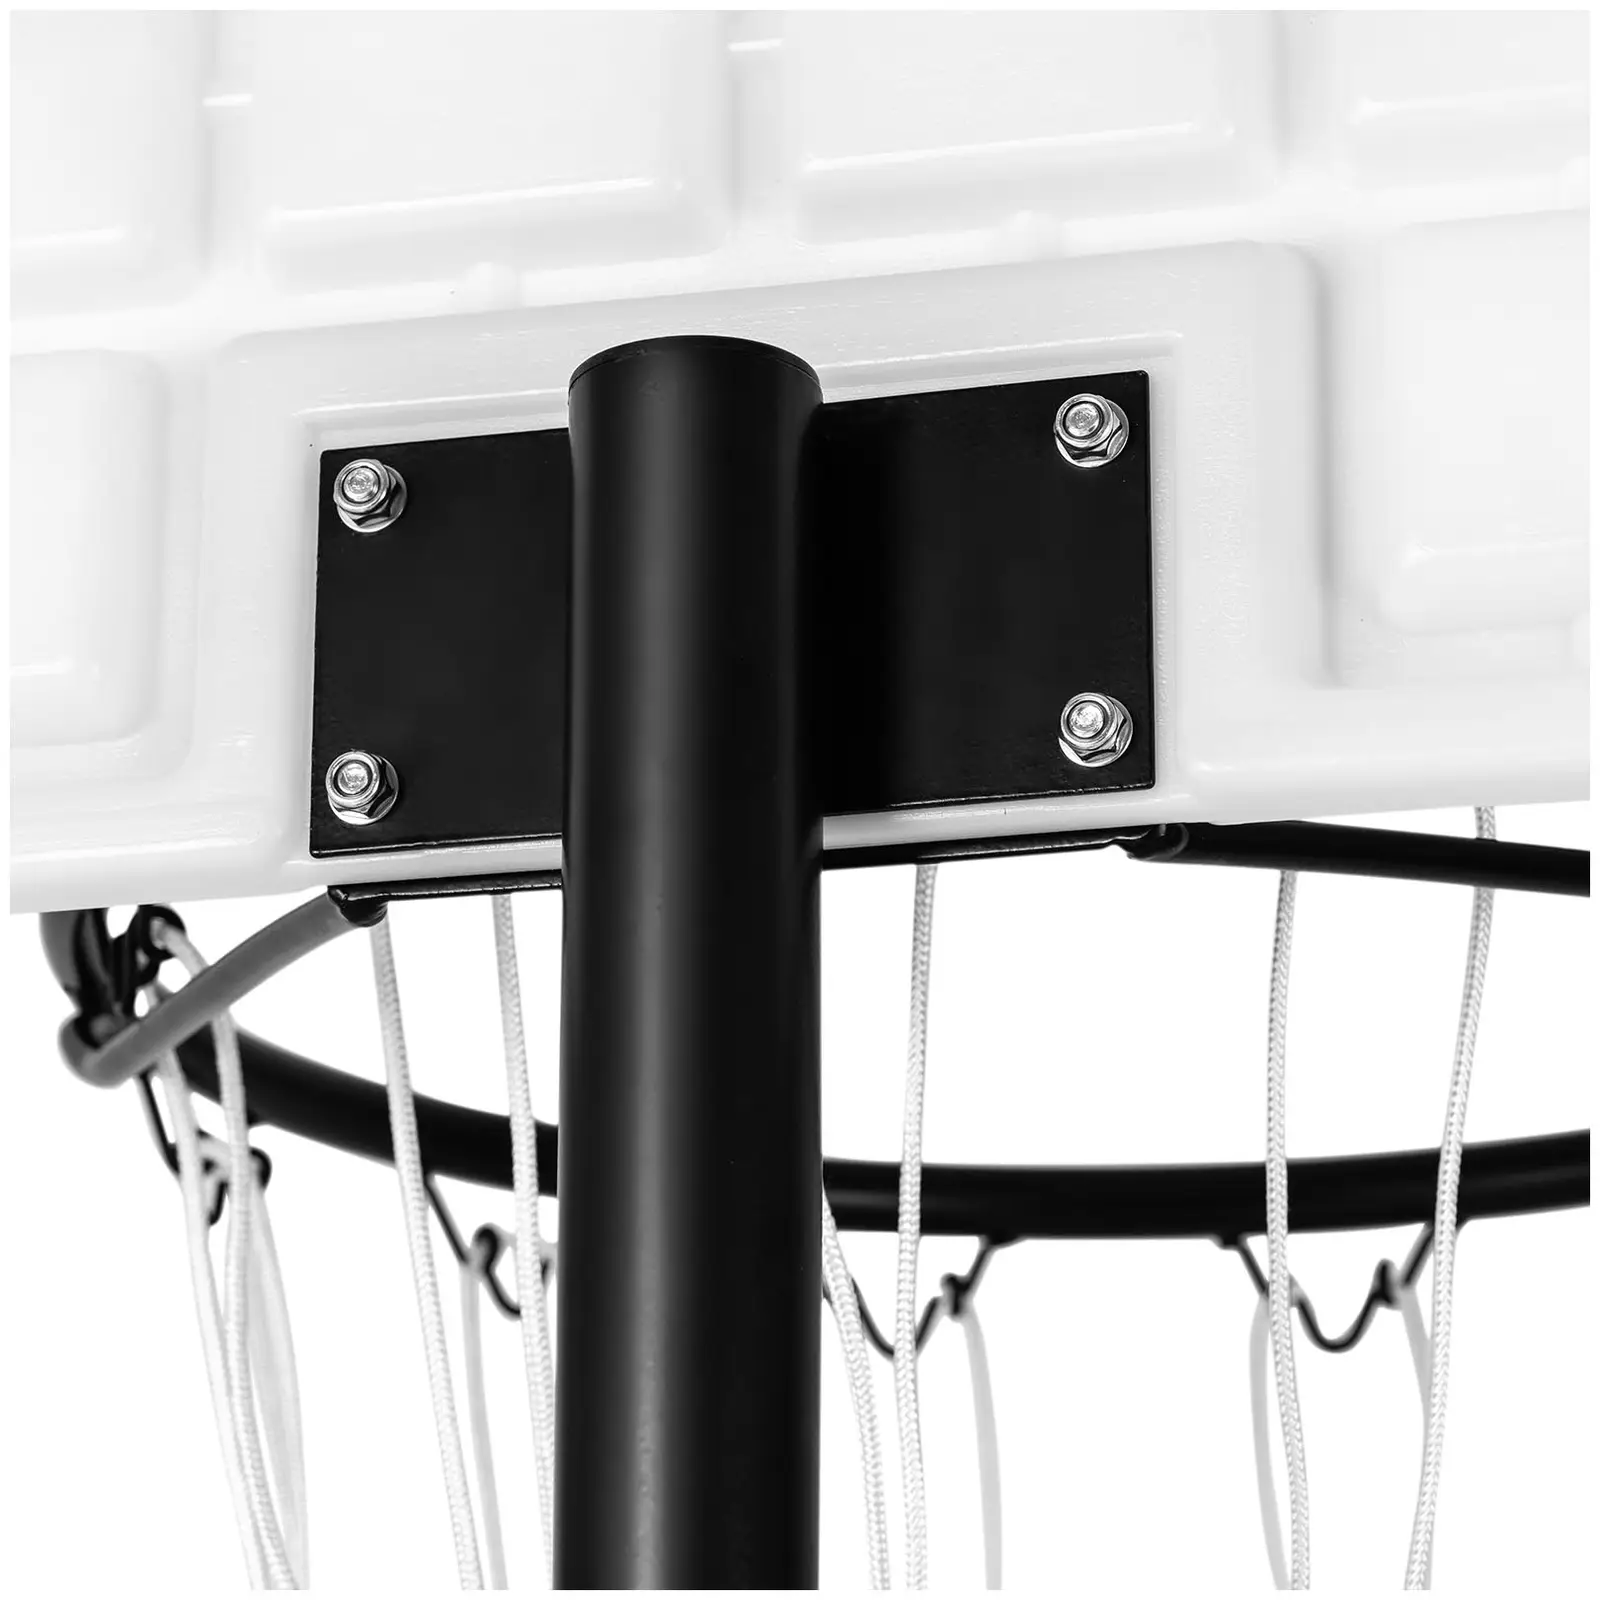 Basketballkorb Kinder - höhenverstellbar - 178 bis 205 cm